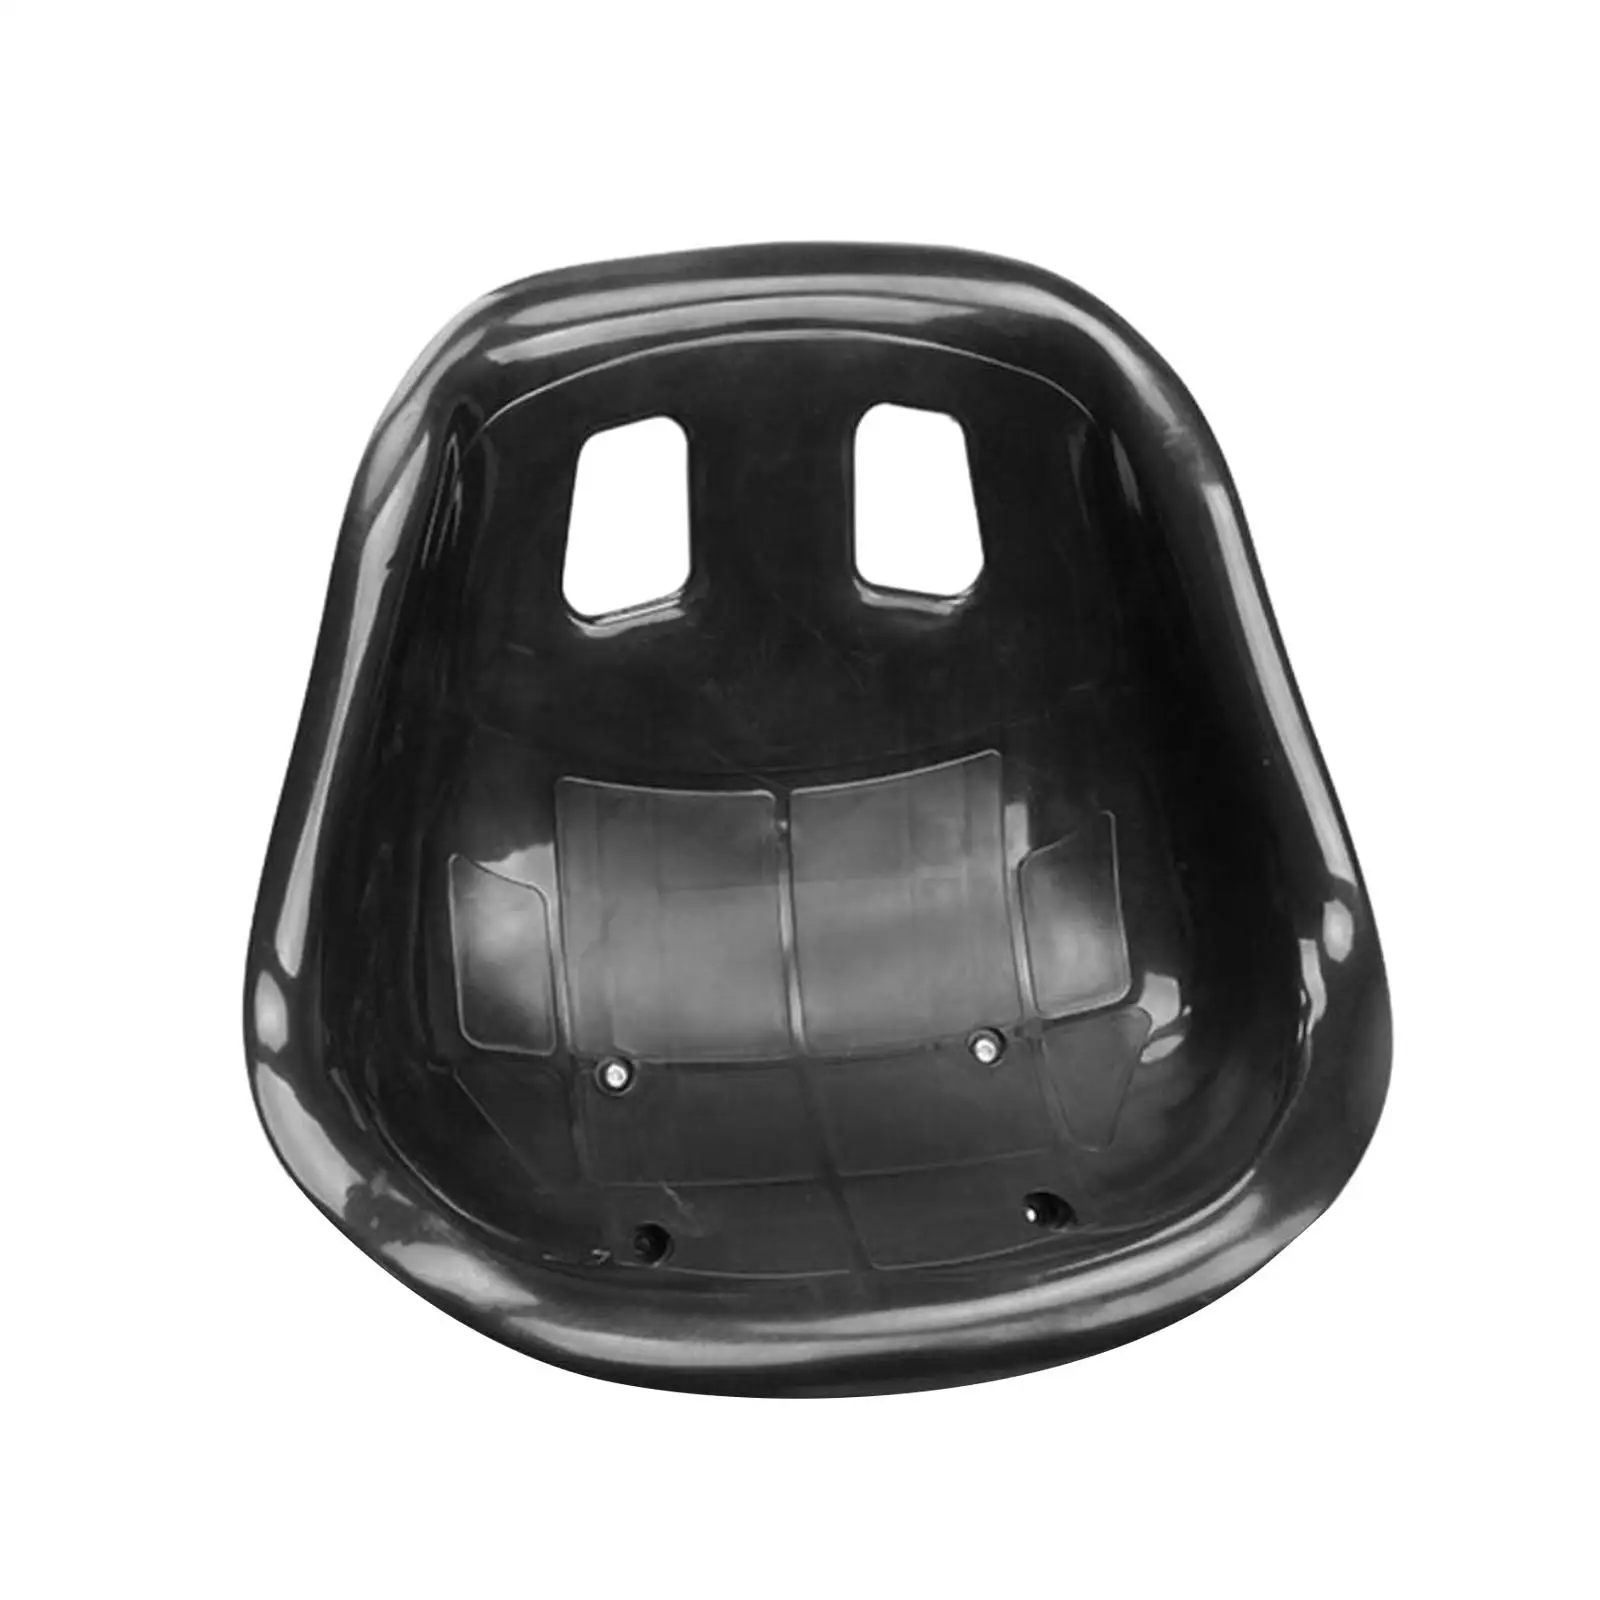 Go Kart Car Seat Black for Balancing Vehicle Accessories Kart Go Seat